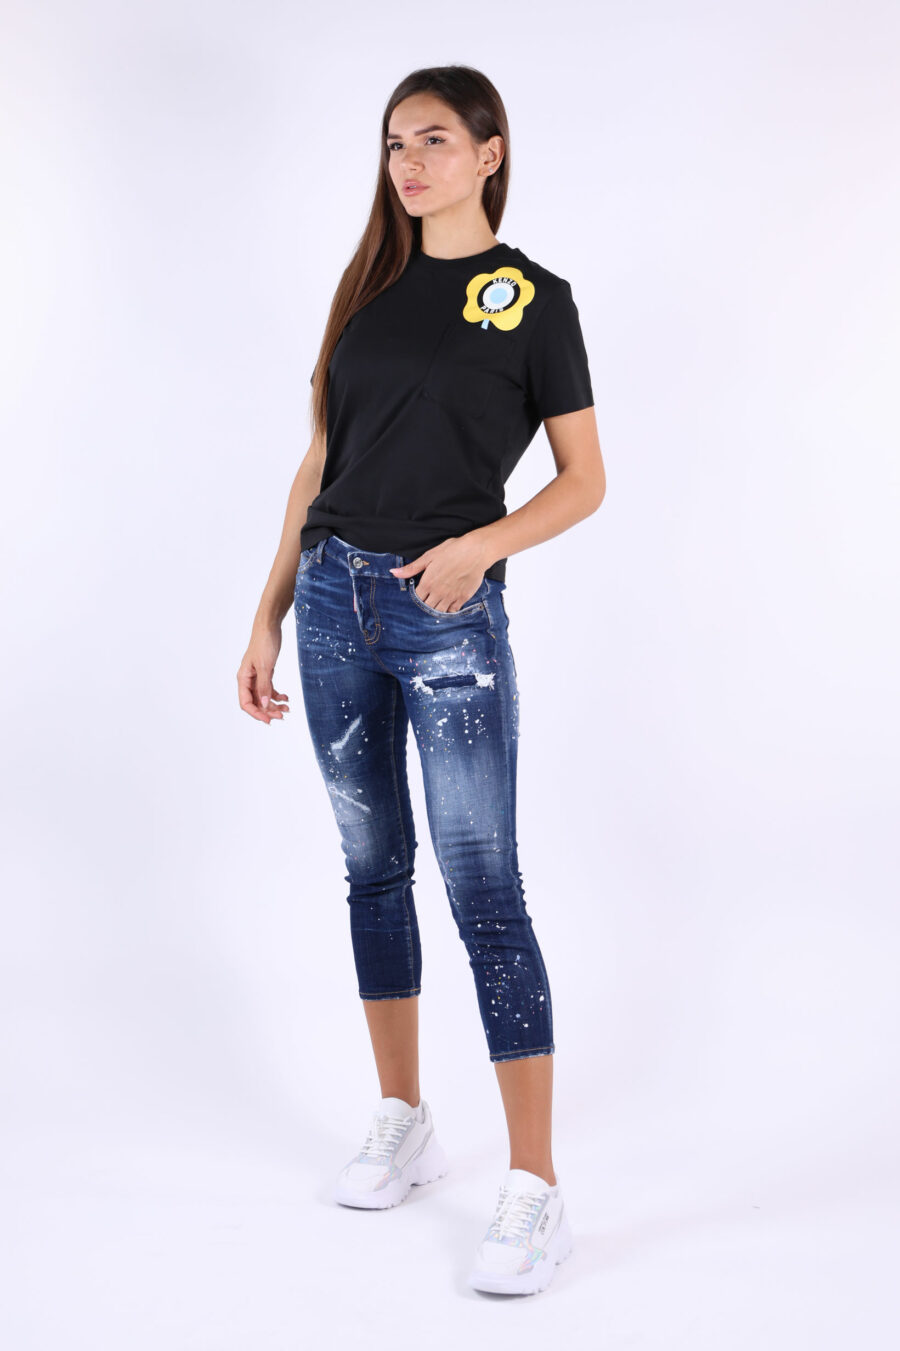 Schwarzes T-Shirt mit gelbem "kenzo target" Logo - 361223054662202020